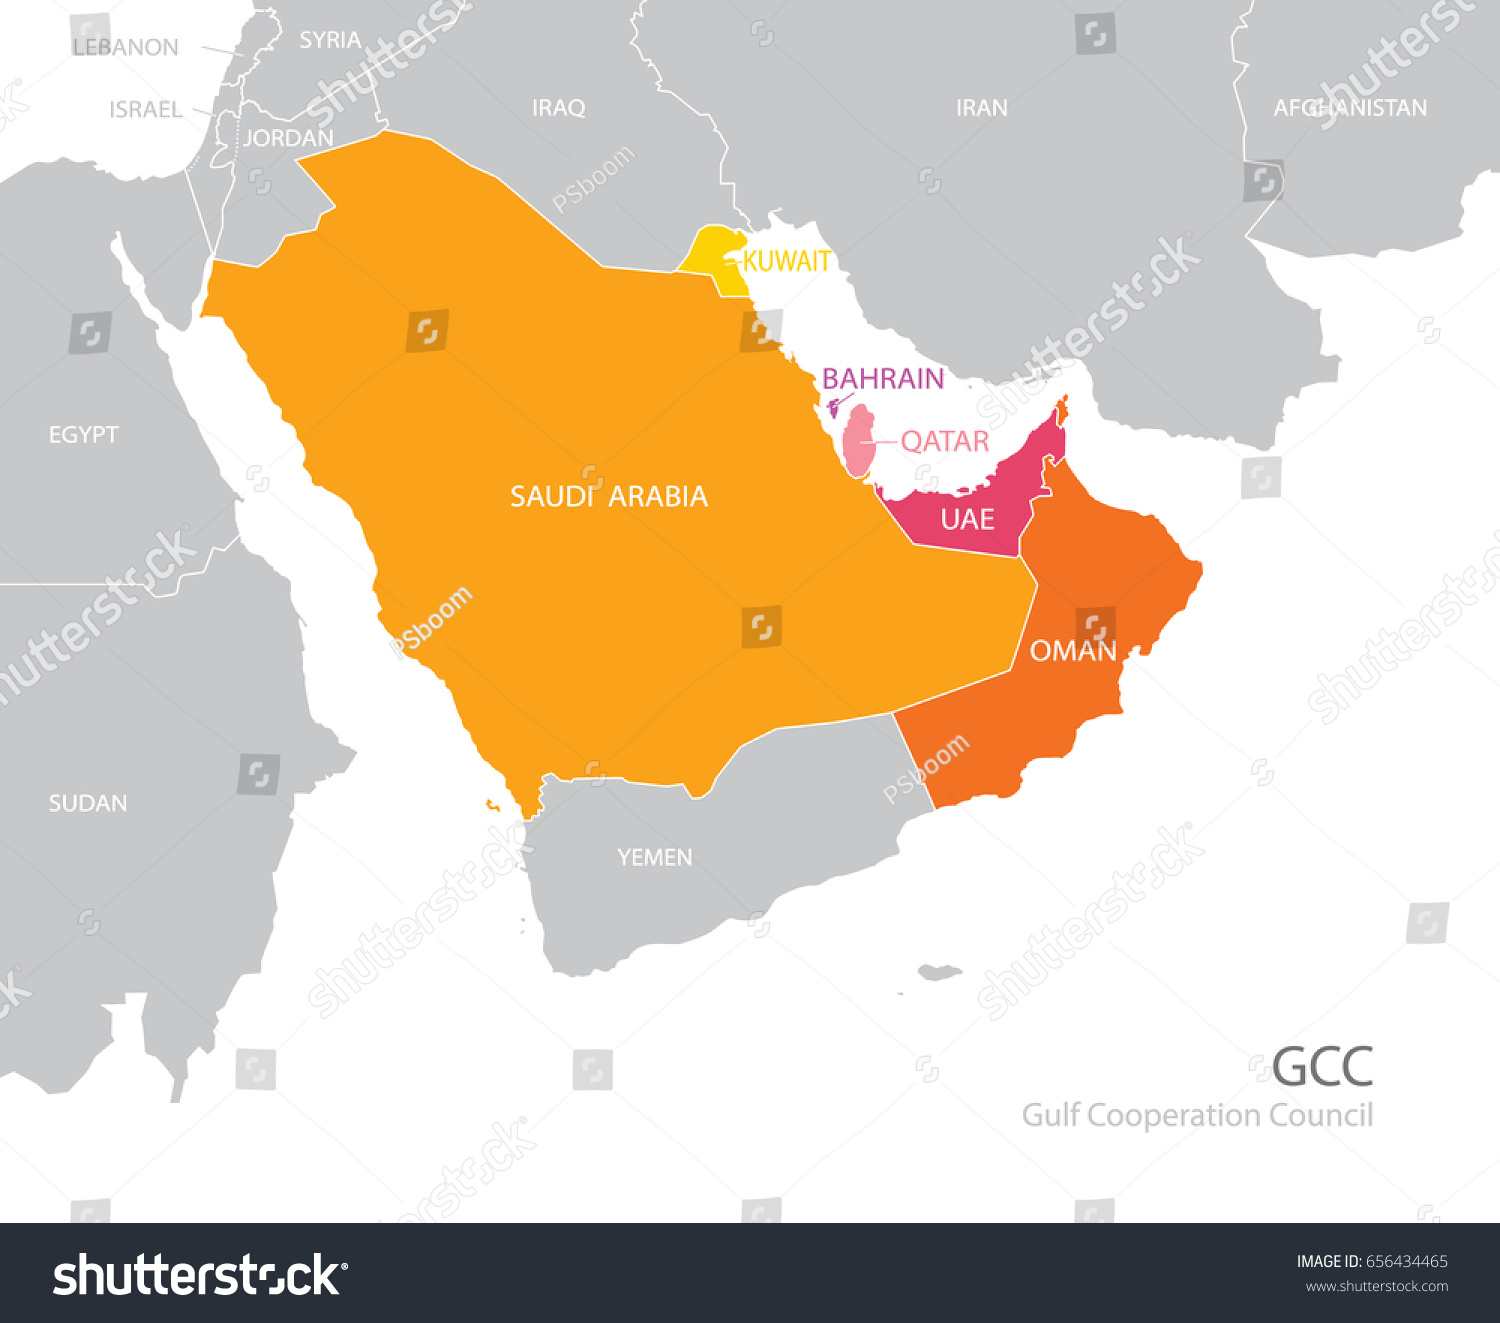 1,779 Arabian gulf map Images, Stock Photos & Vectors | Shutterstock